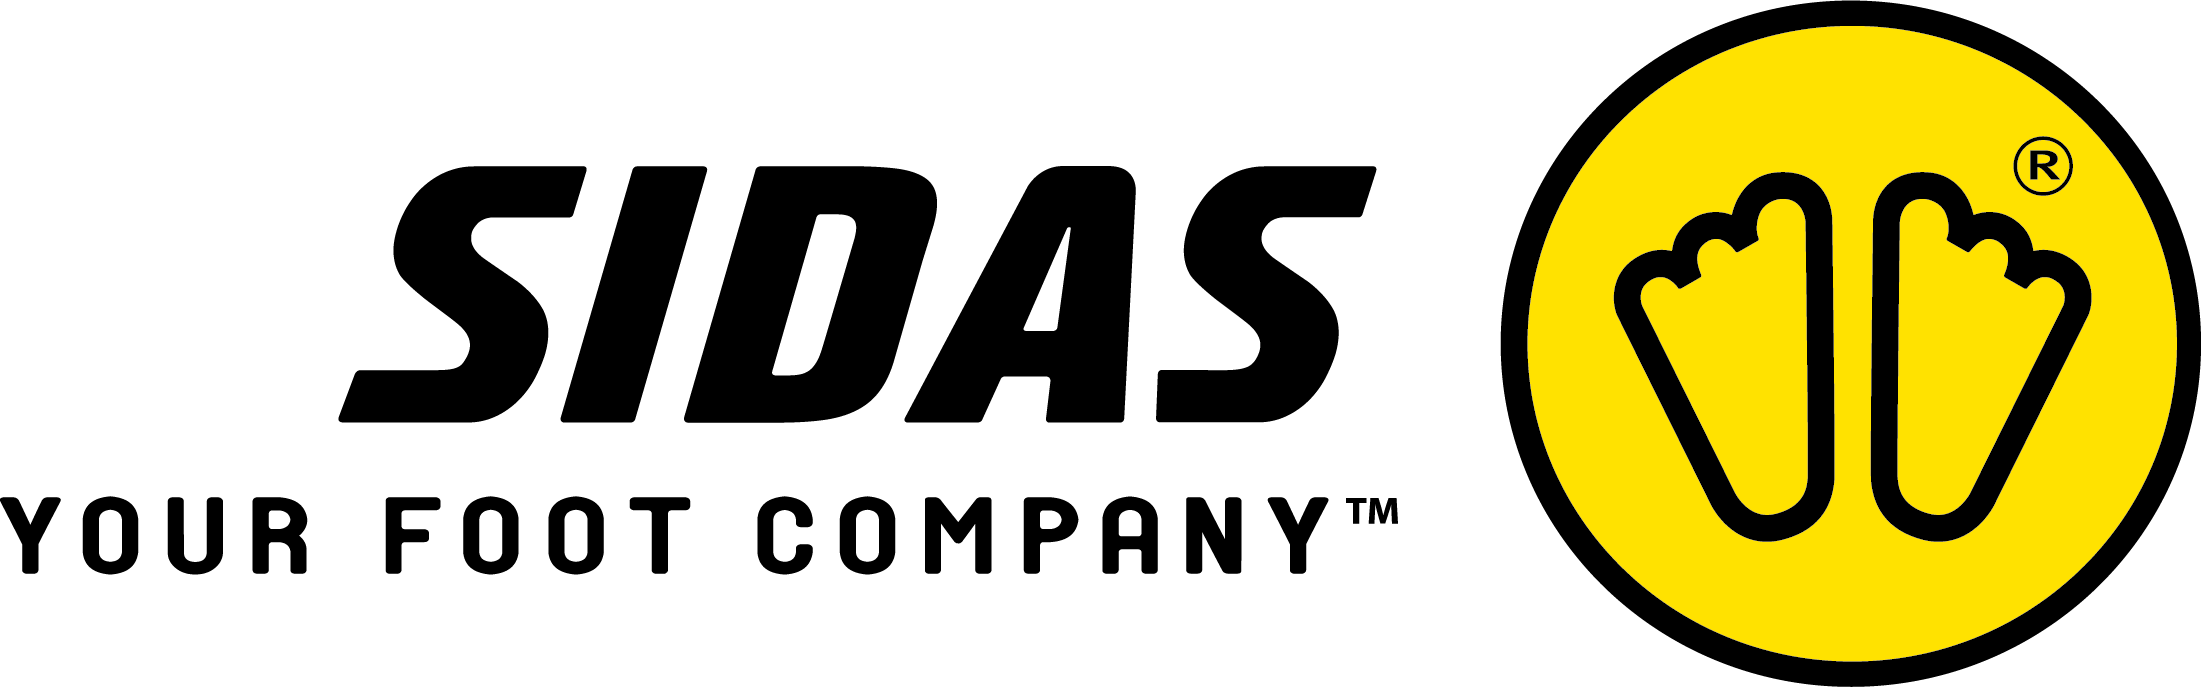 sidas logo black horizontal